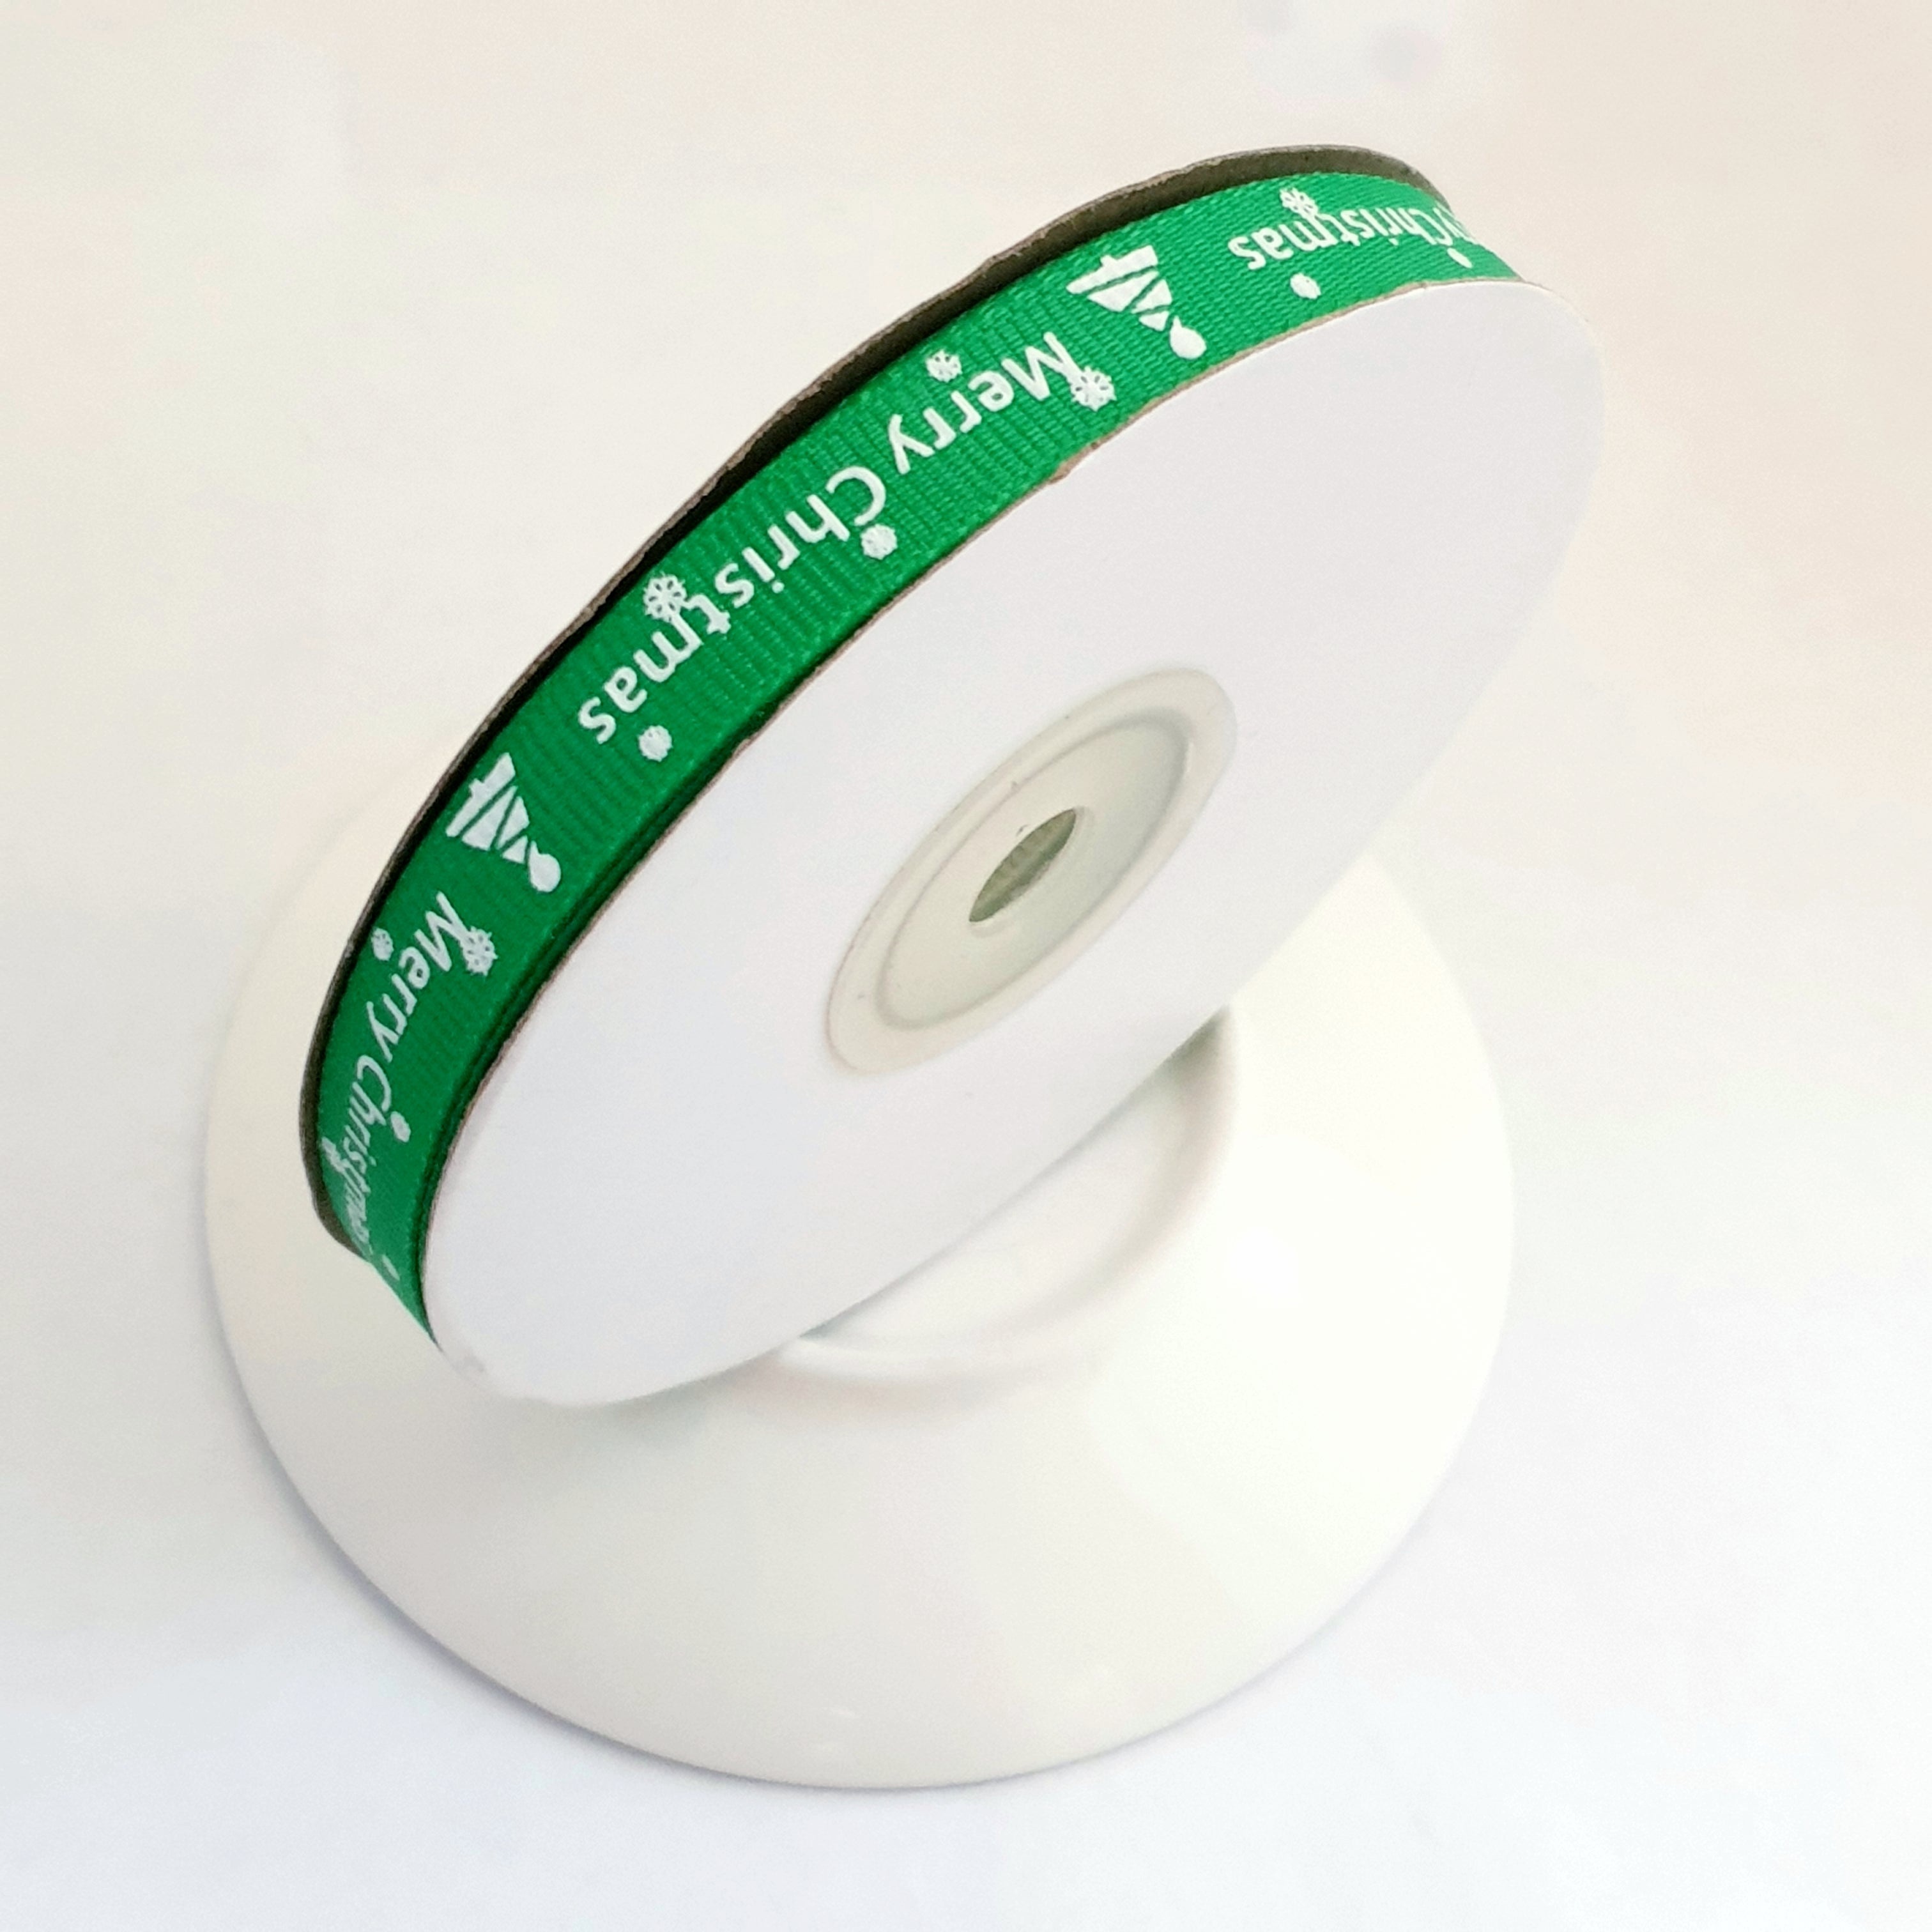 MajorCrafts 10mm 22metres Green 'Merry Christmas' Printed Single Sided Grosgrain Fabric Ribbon